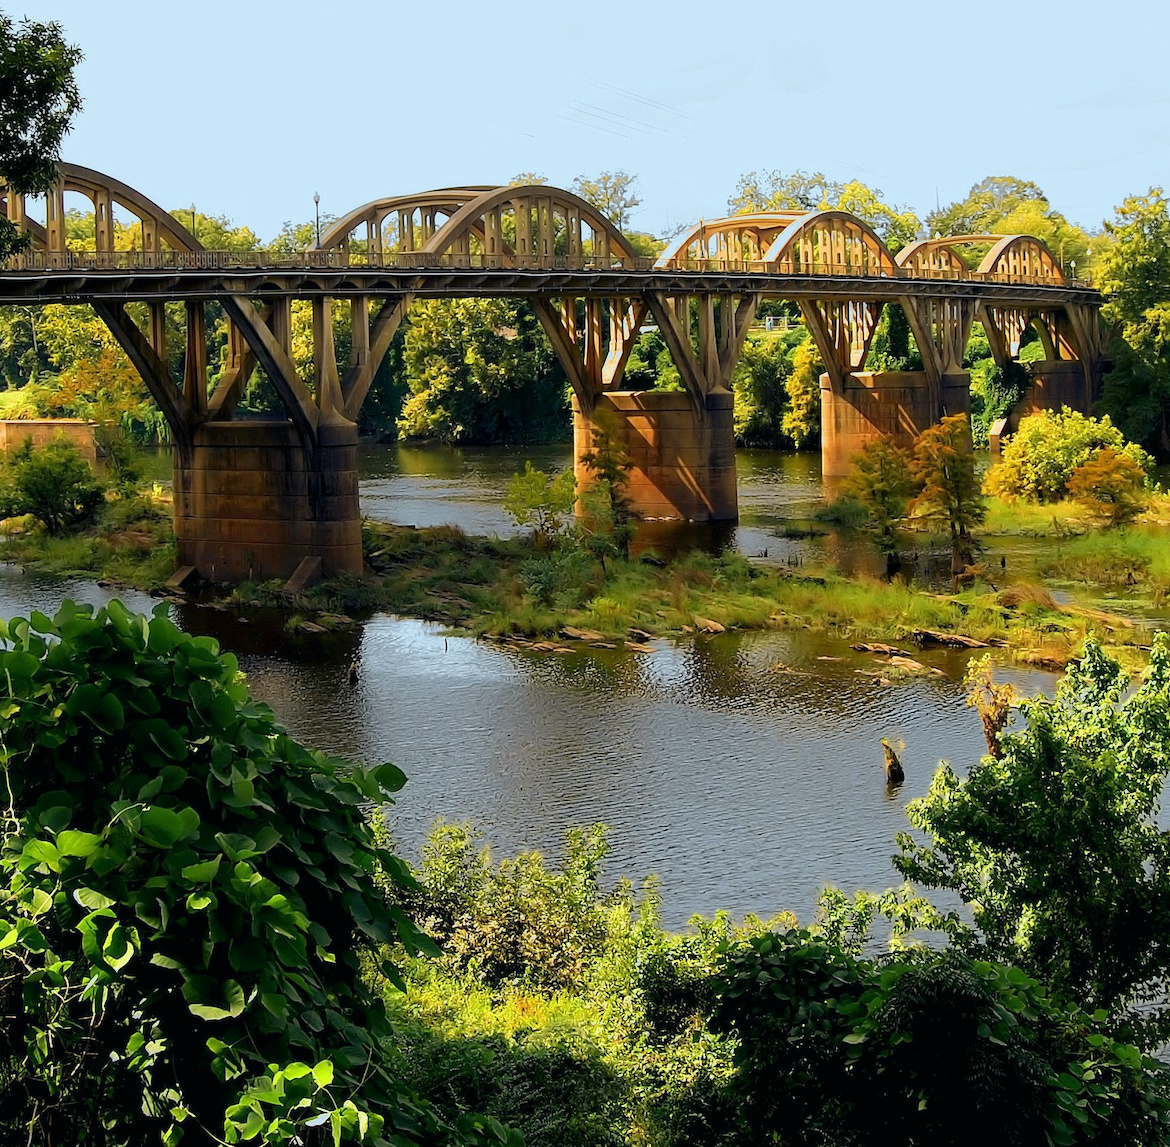 Bridge over the Coosa River